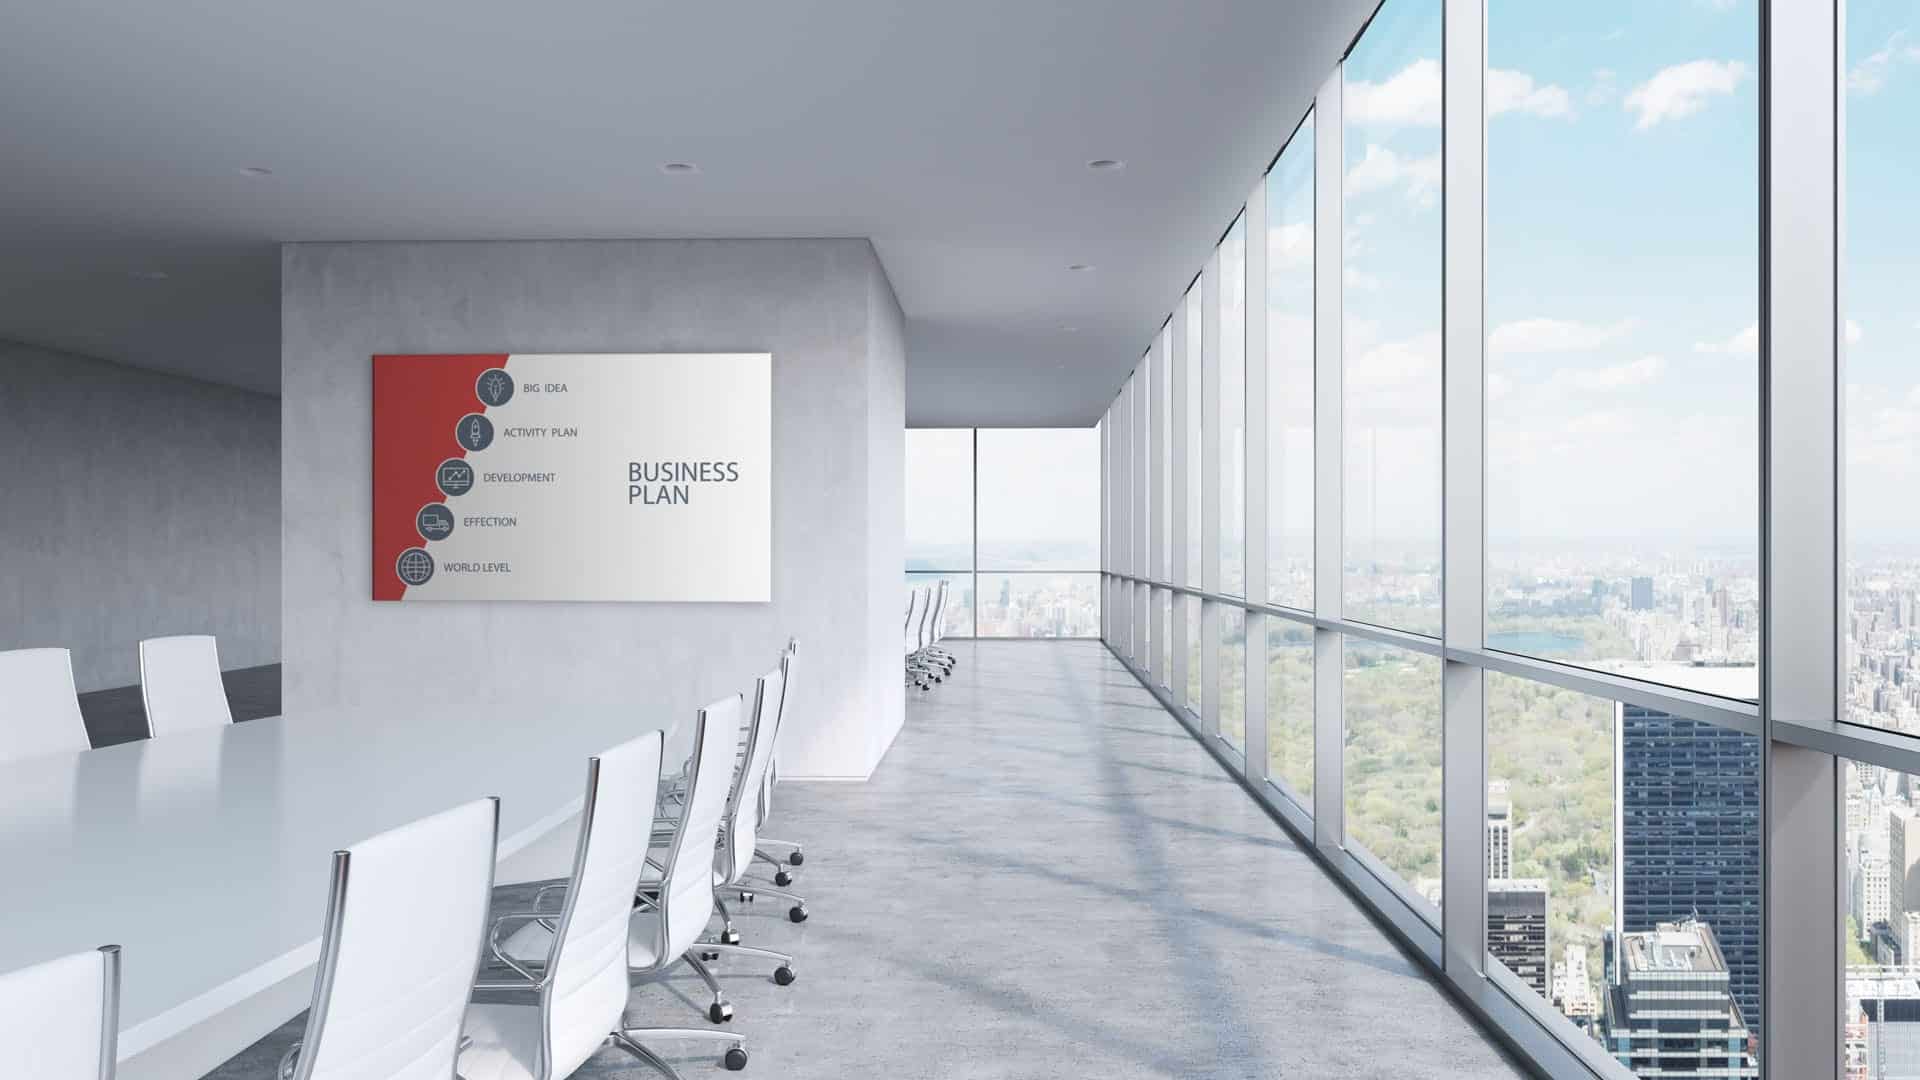 Neoti UHD LED wall in corporate boardroom